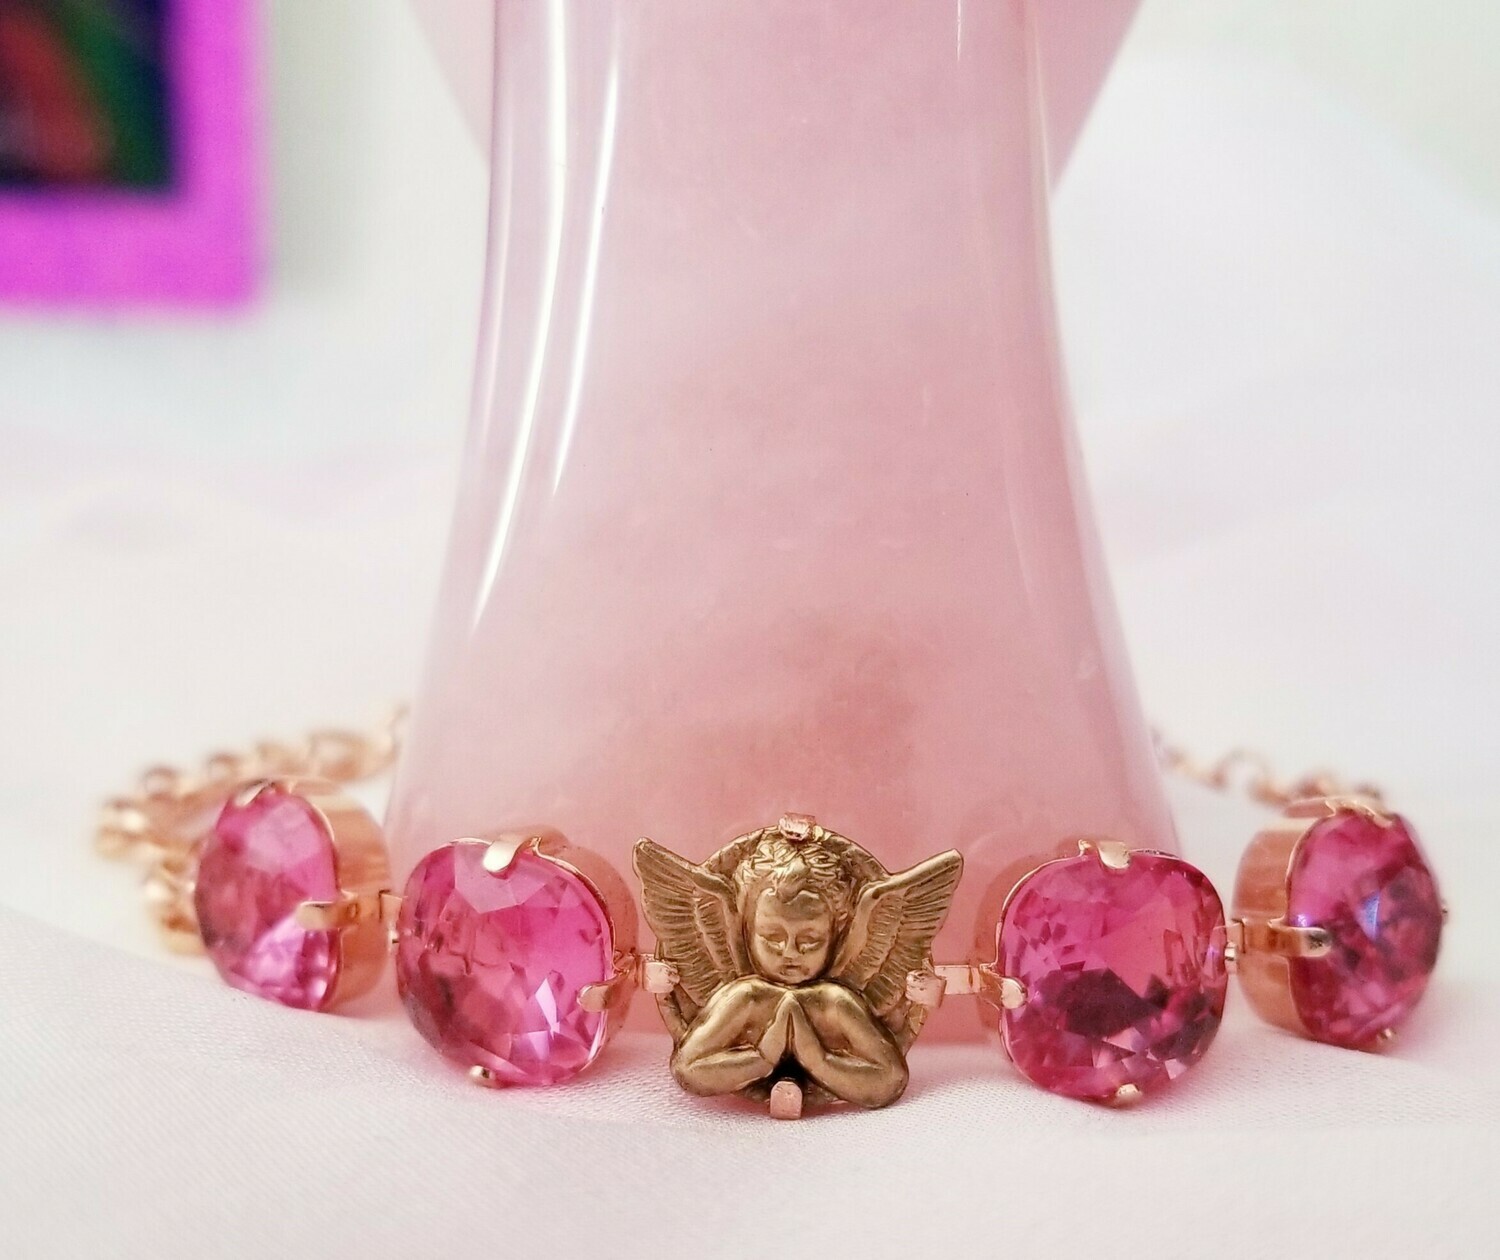 Beautiful Rose Ray Guardian Angel/ Devic Crystal LOVE Technology Bracelet/$144.00/188.00/CV Retreat Sale